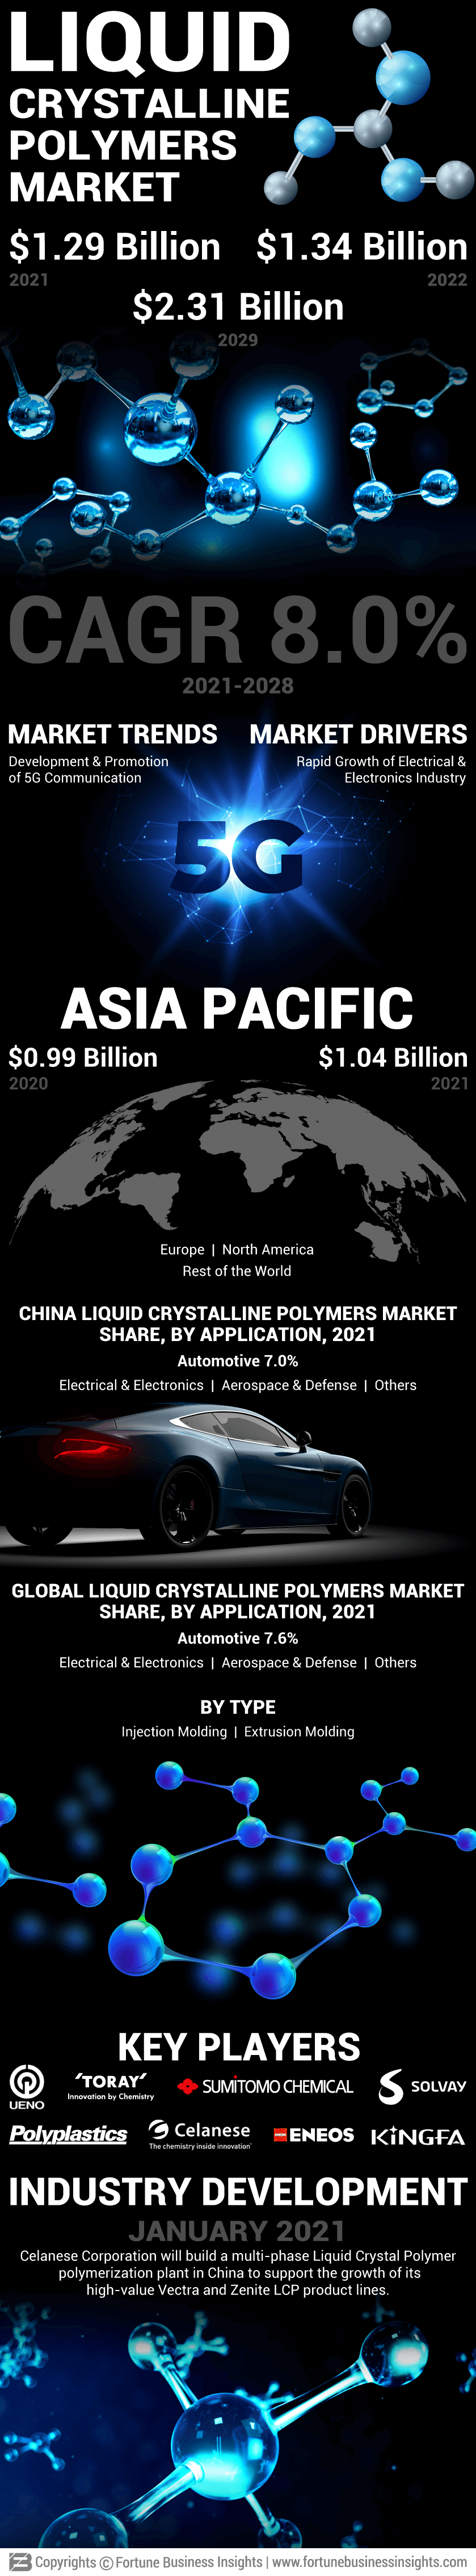 Liquid Crystalline Polymers Market